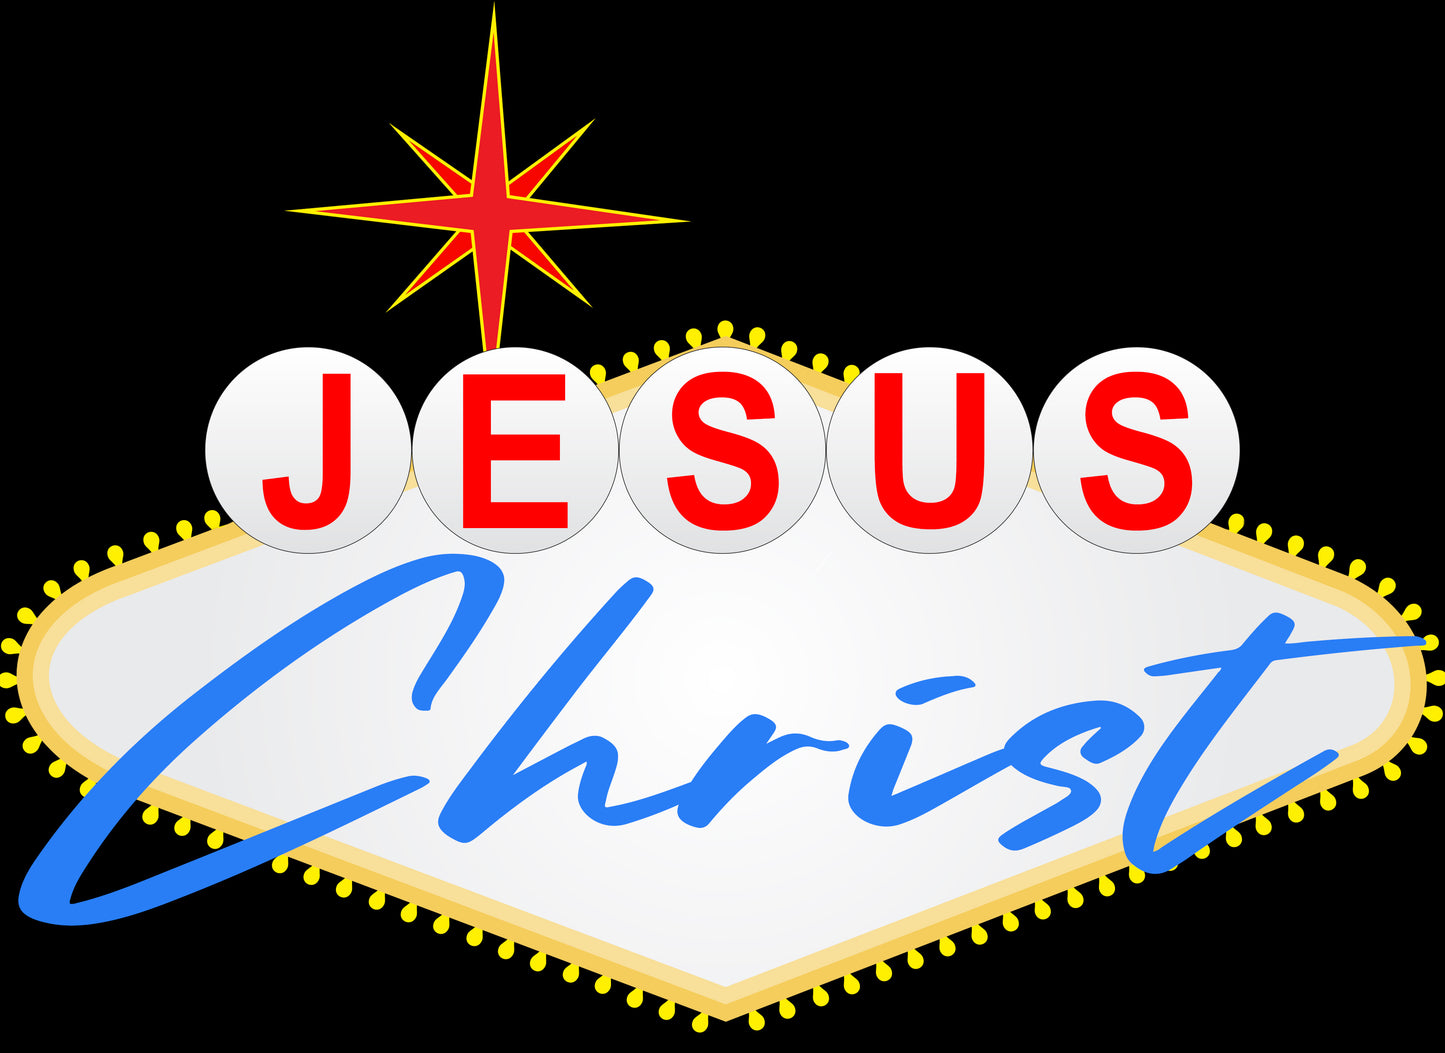 Jesus Christ (Las Vegas Sign)